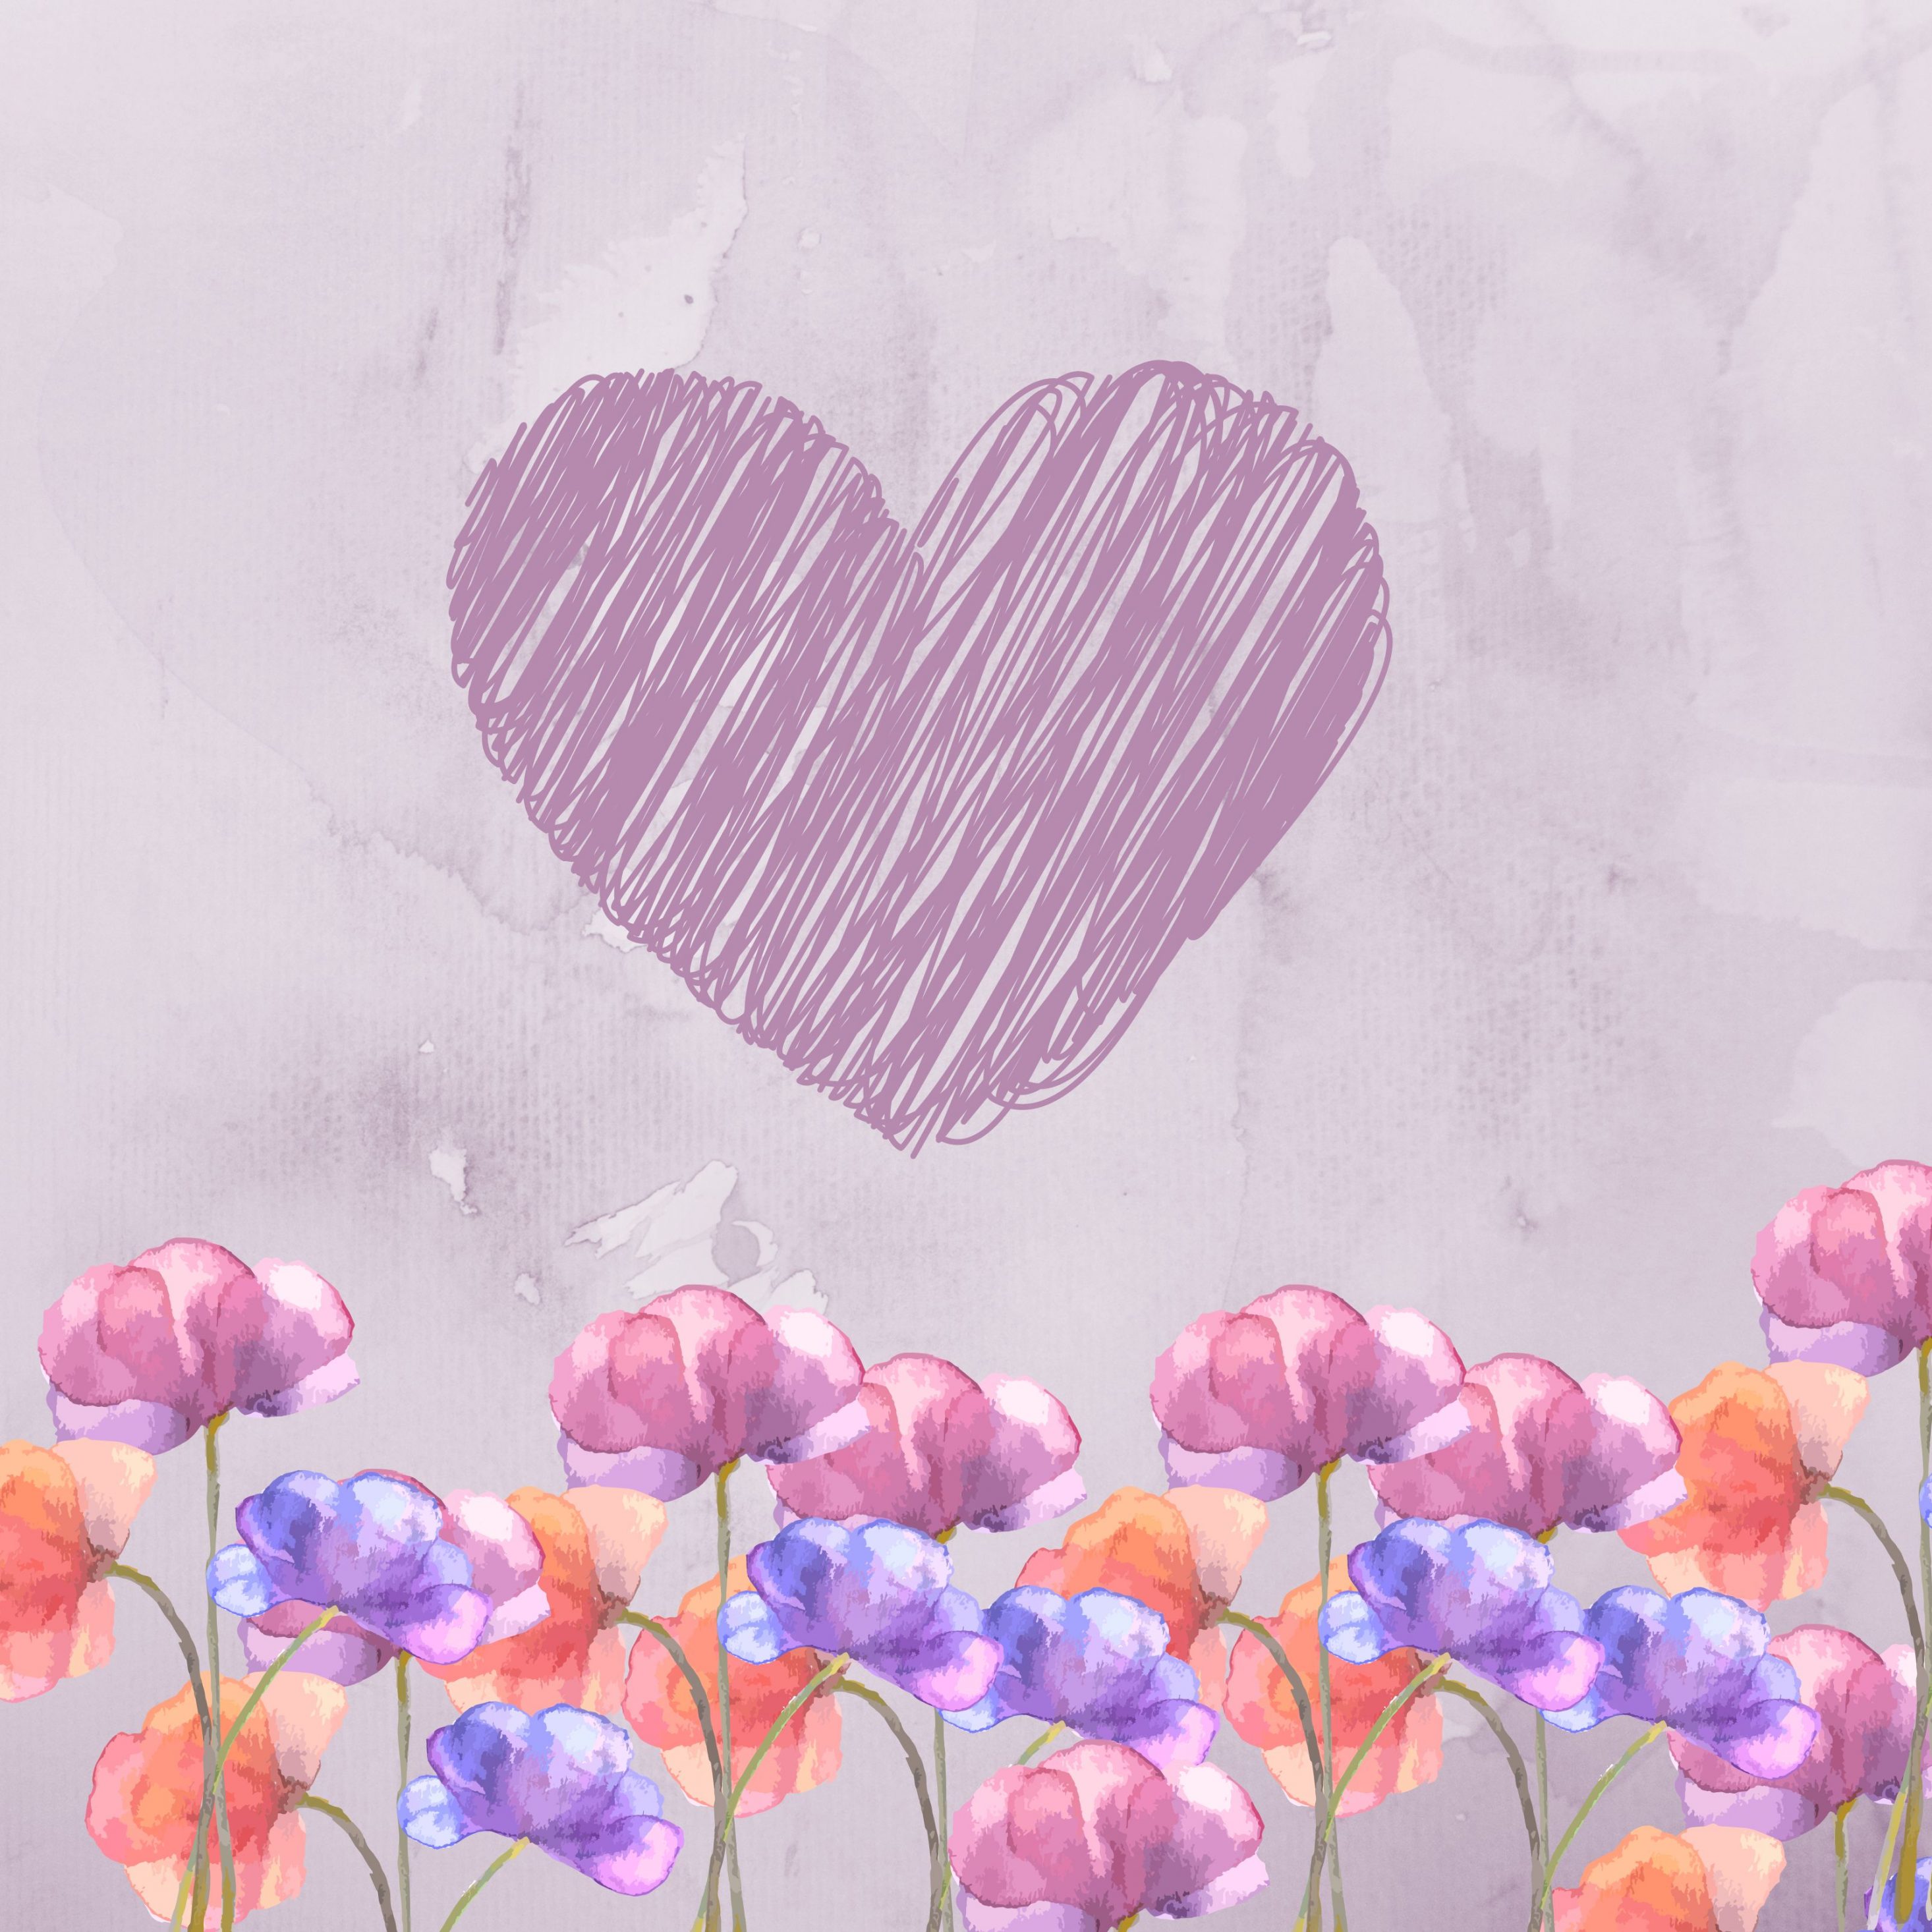 2932x2932 iPad Pro wallpaper 4k Heart Floral Pastels Ipad Wallpaper 2932x2932 pixels resolution